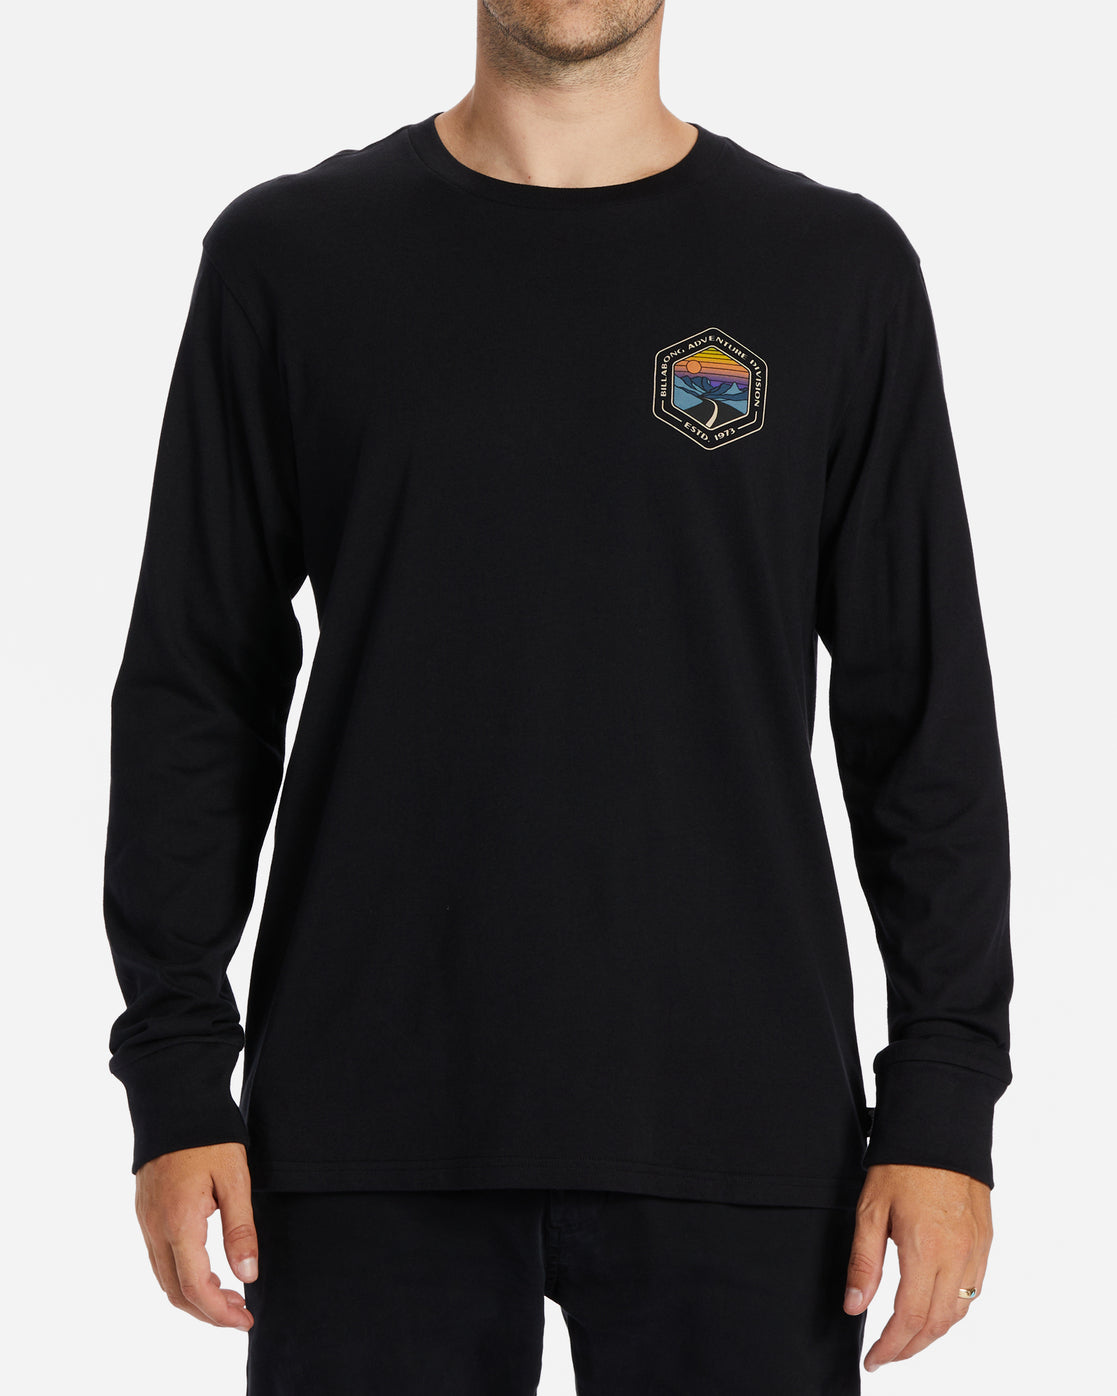 Rockies Long Sleeve T-Shirt - Black